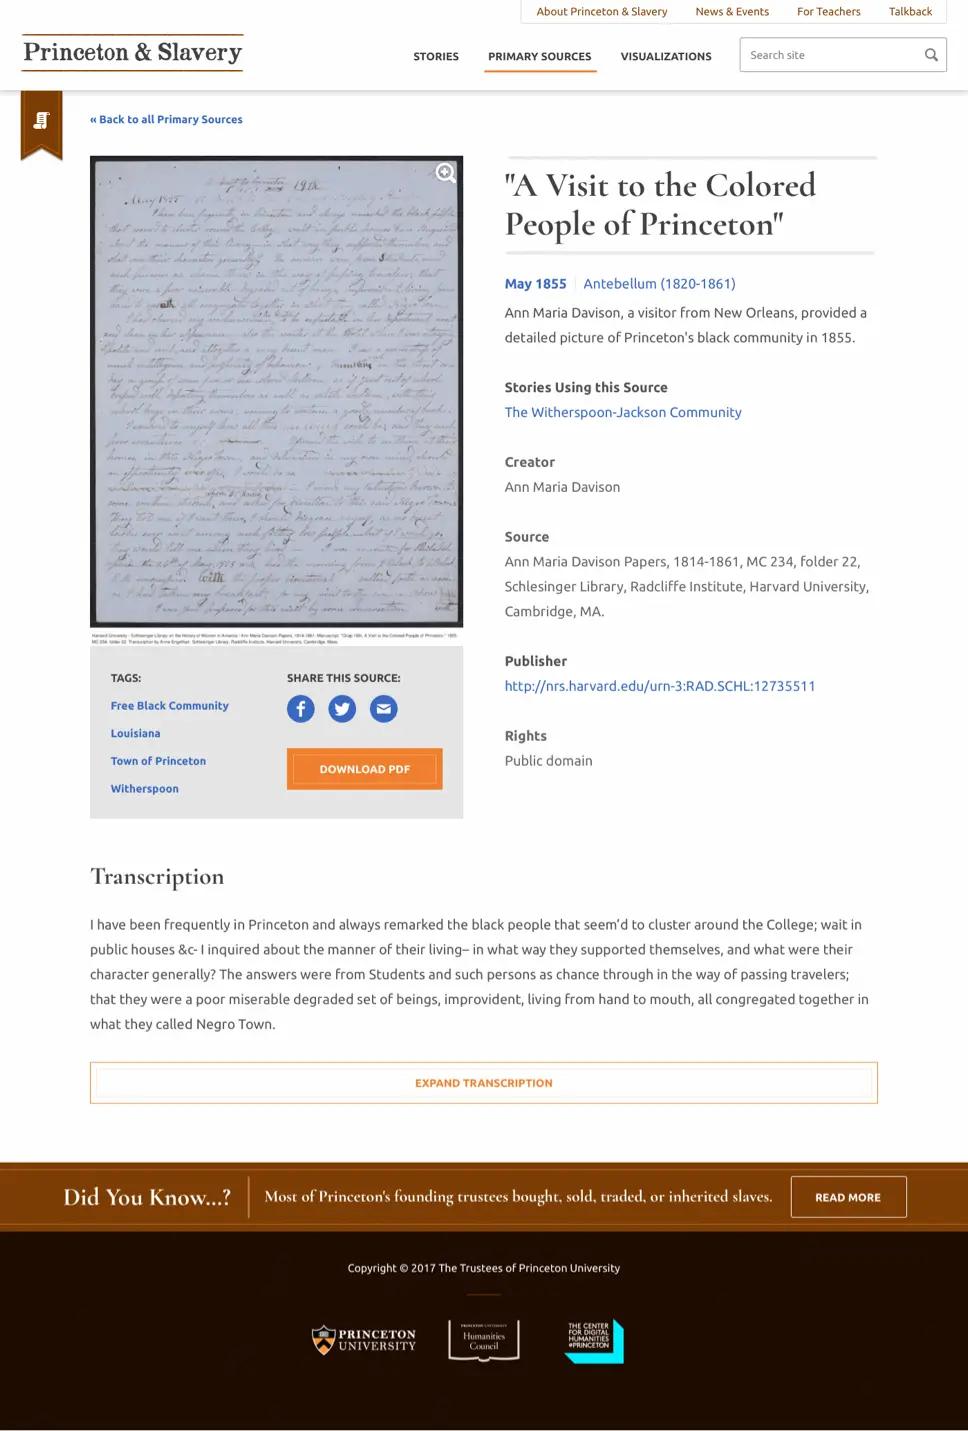 A screenshot of a Princeton & Slavery "Primary Source" page.